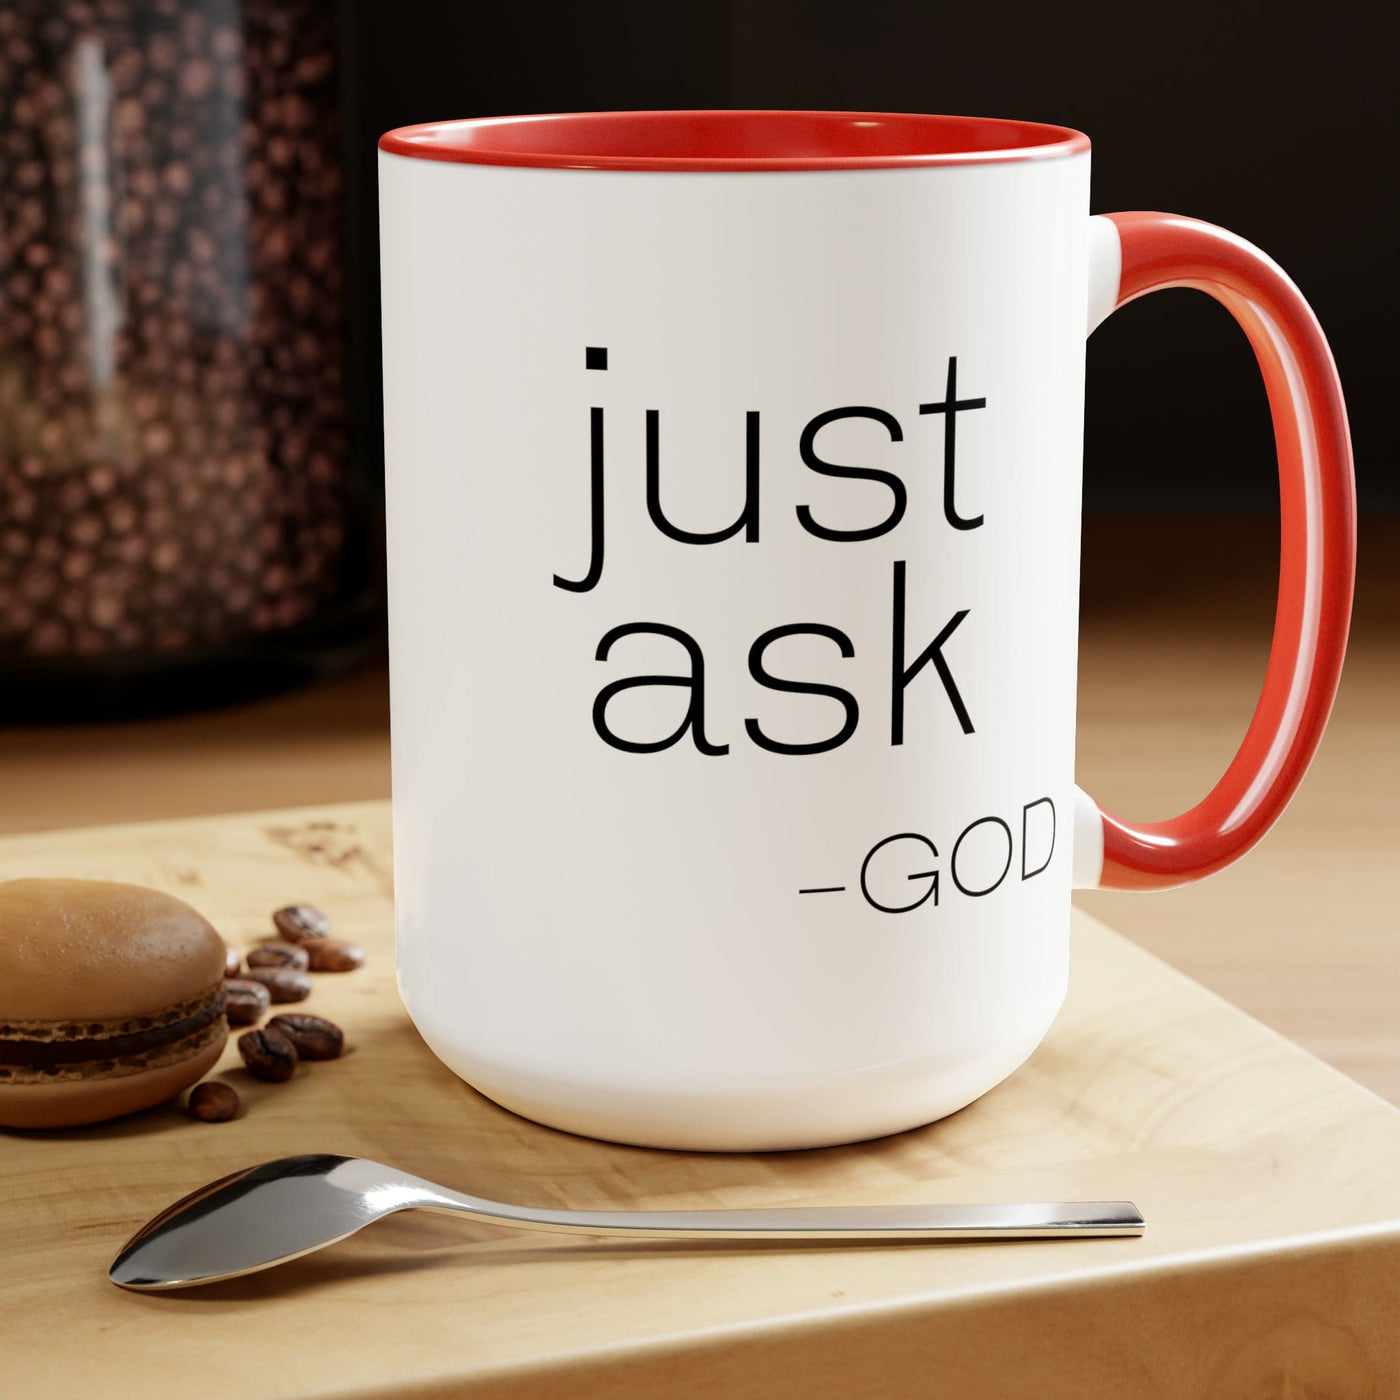 Accent Ceramic Coffee Mug 15oz - Say It Soul ’just Ask-god’ Statement Shirt